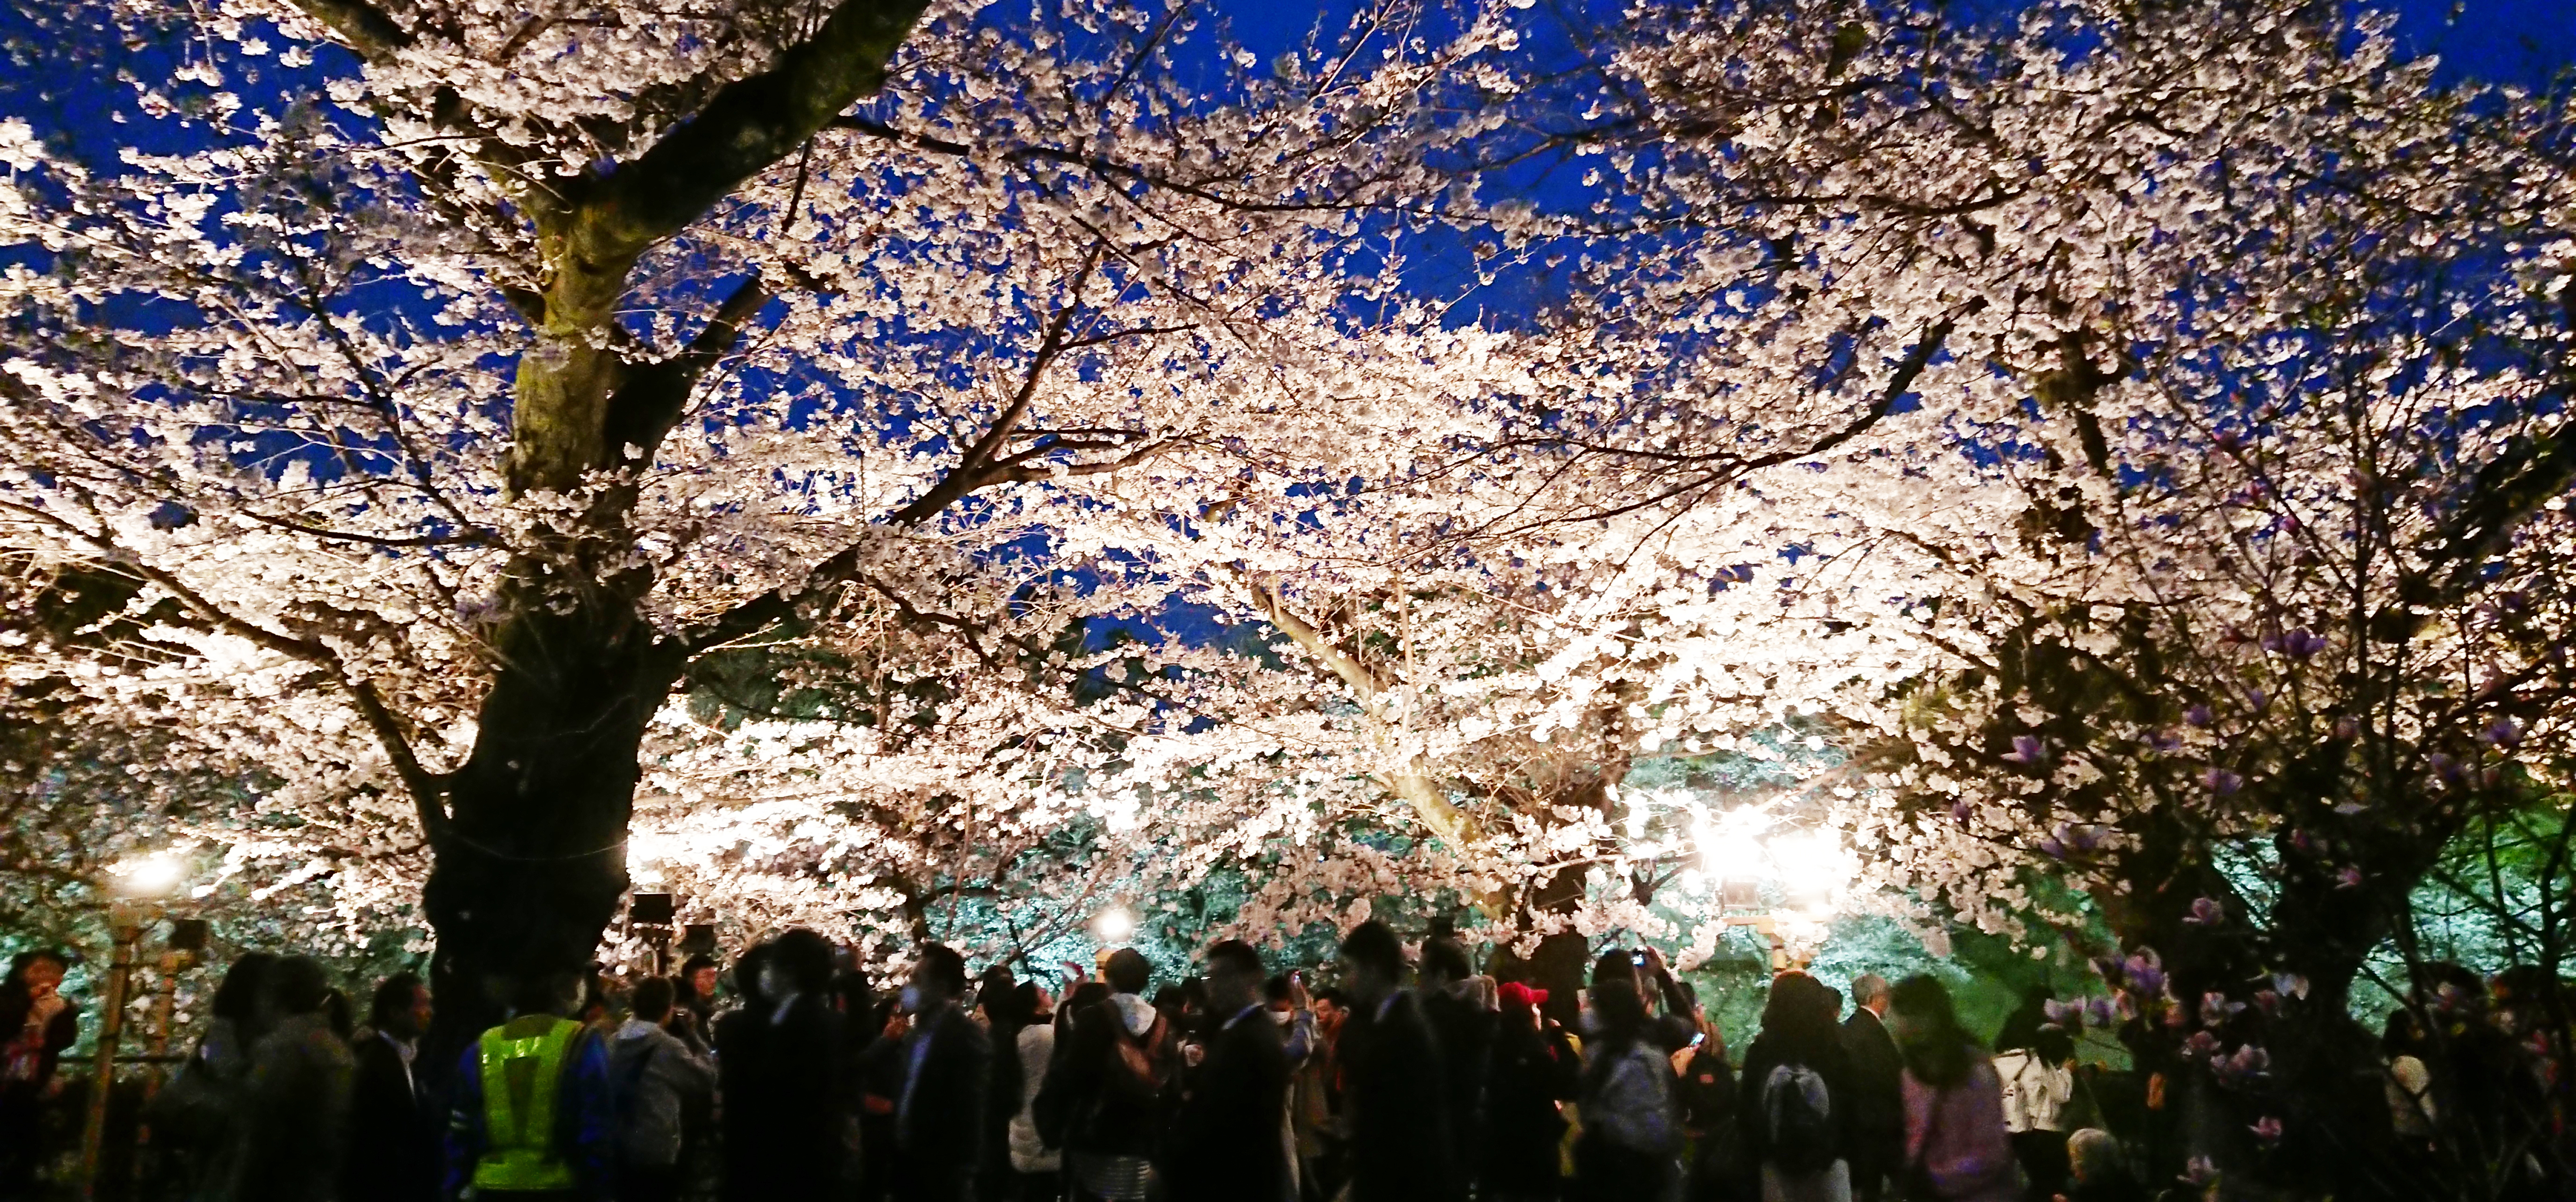 Cherry Blossom Festival in Tokyo: The Chiyoda City Sakura Matsuri 2019